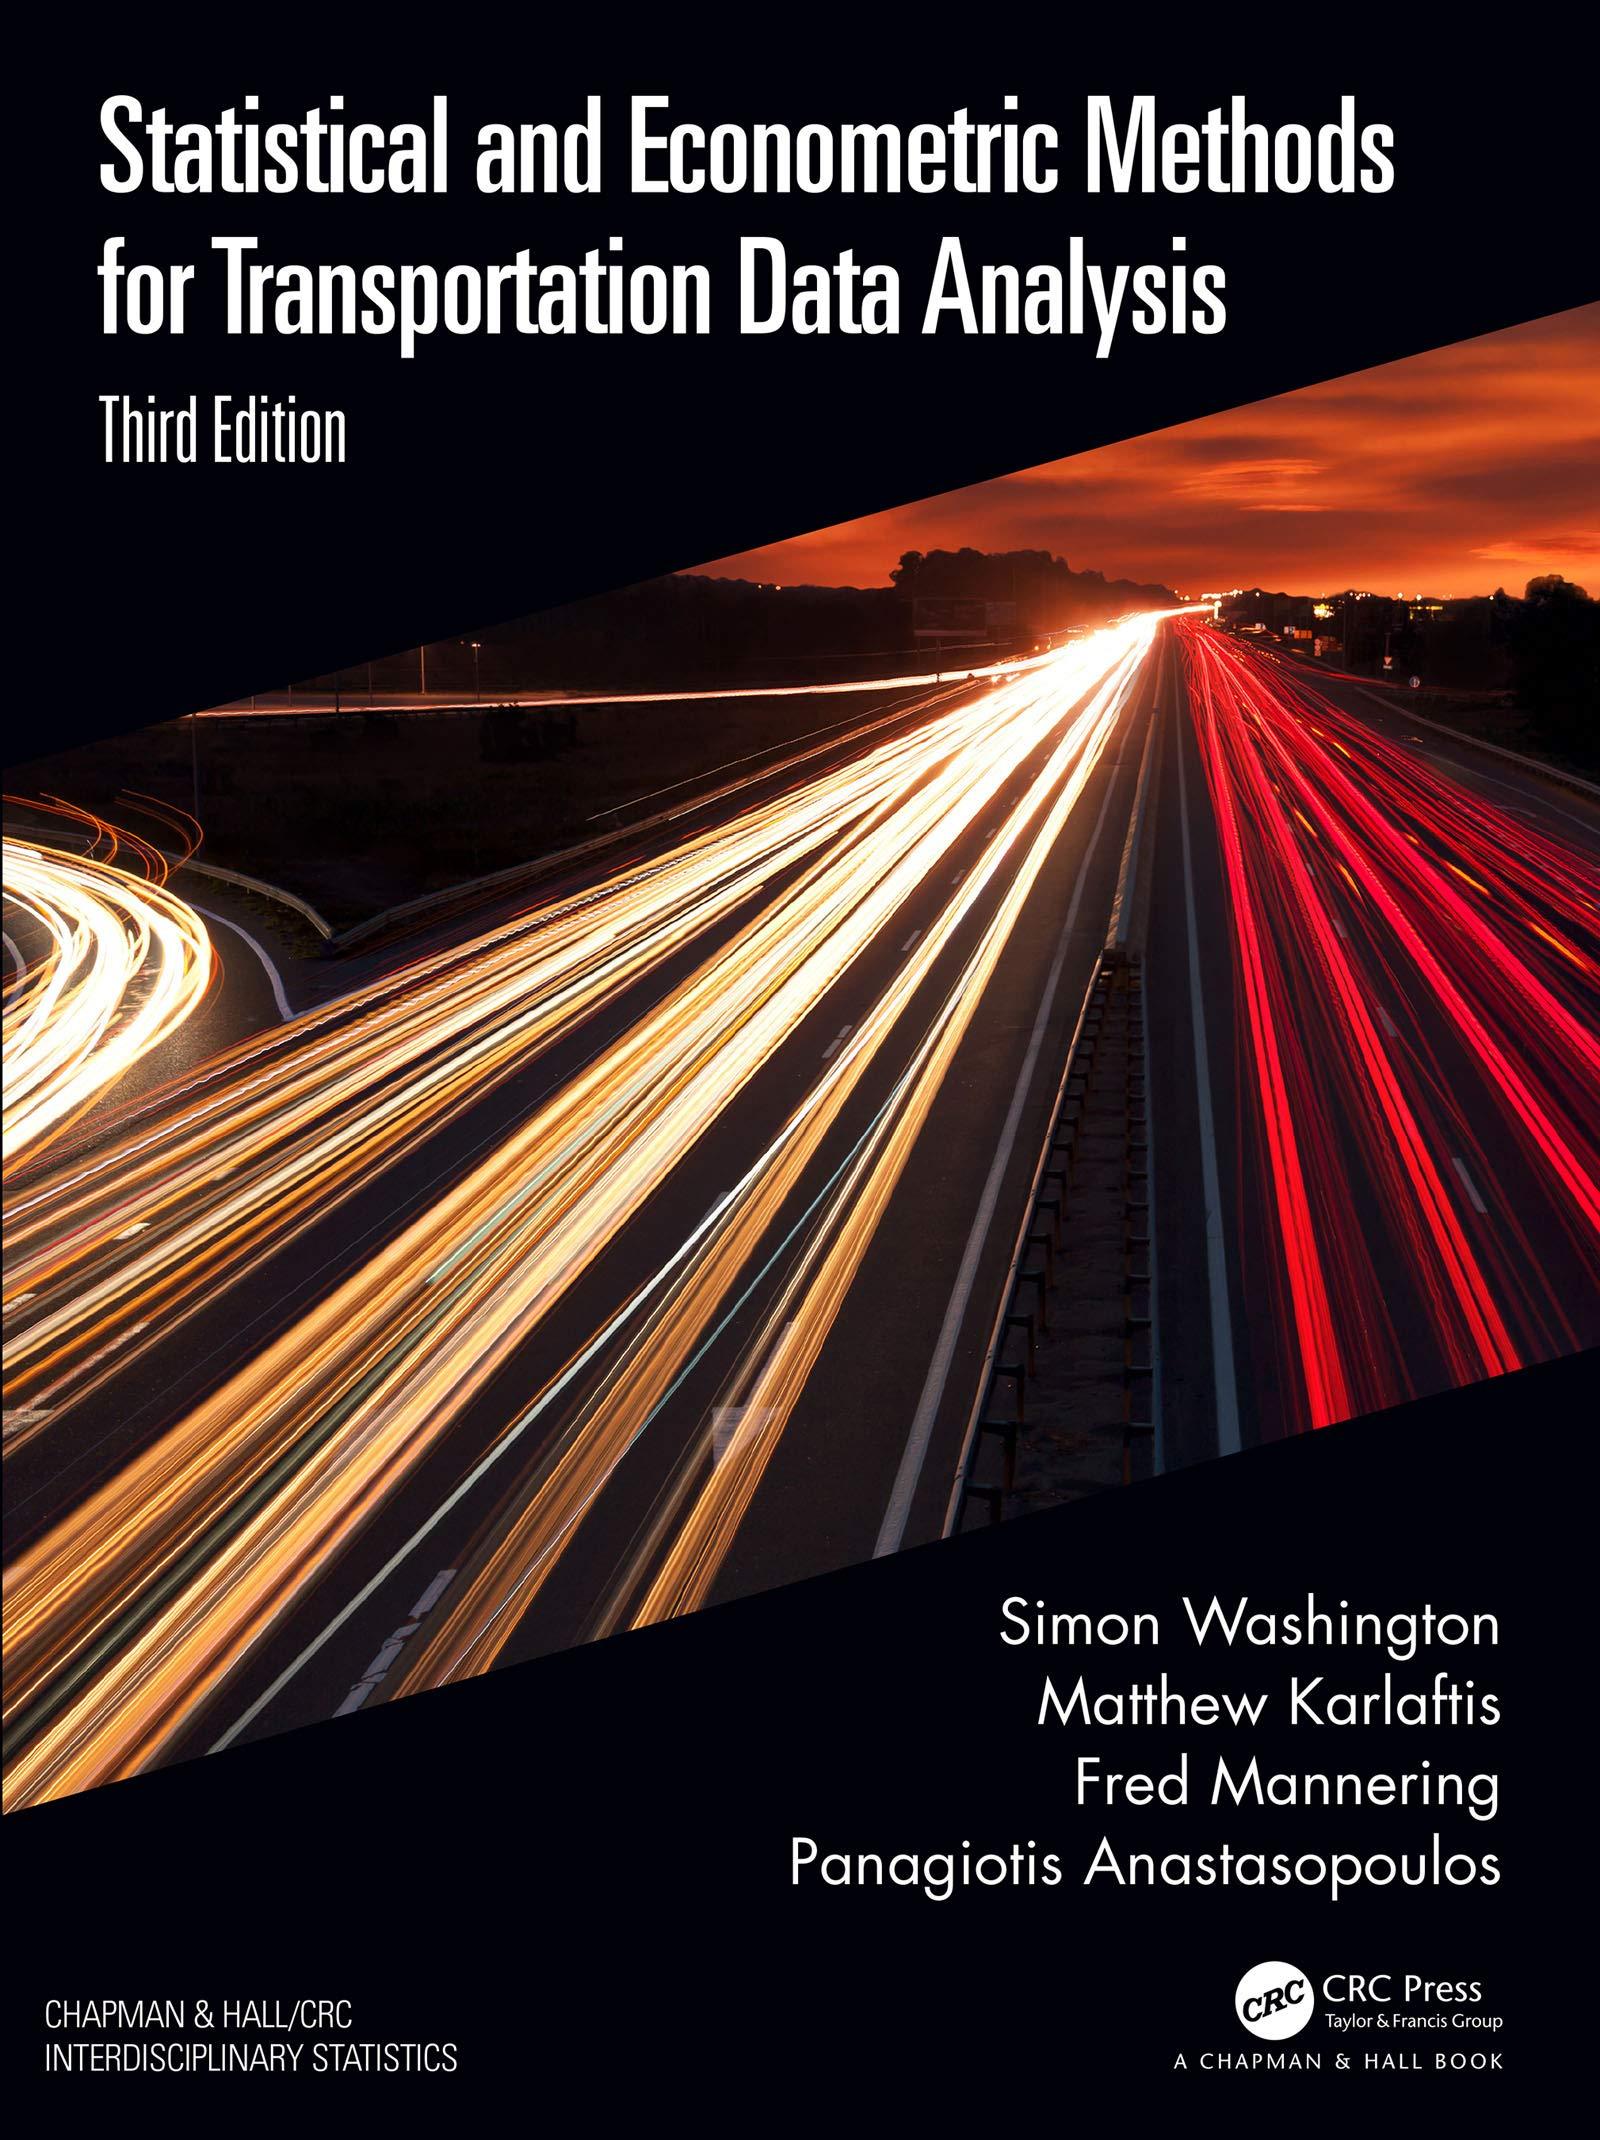 statistical and econometric methods for transportation data analysis 3rd edition simon washington, fred